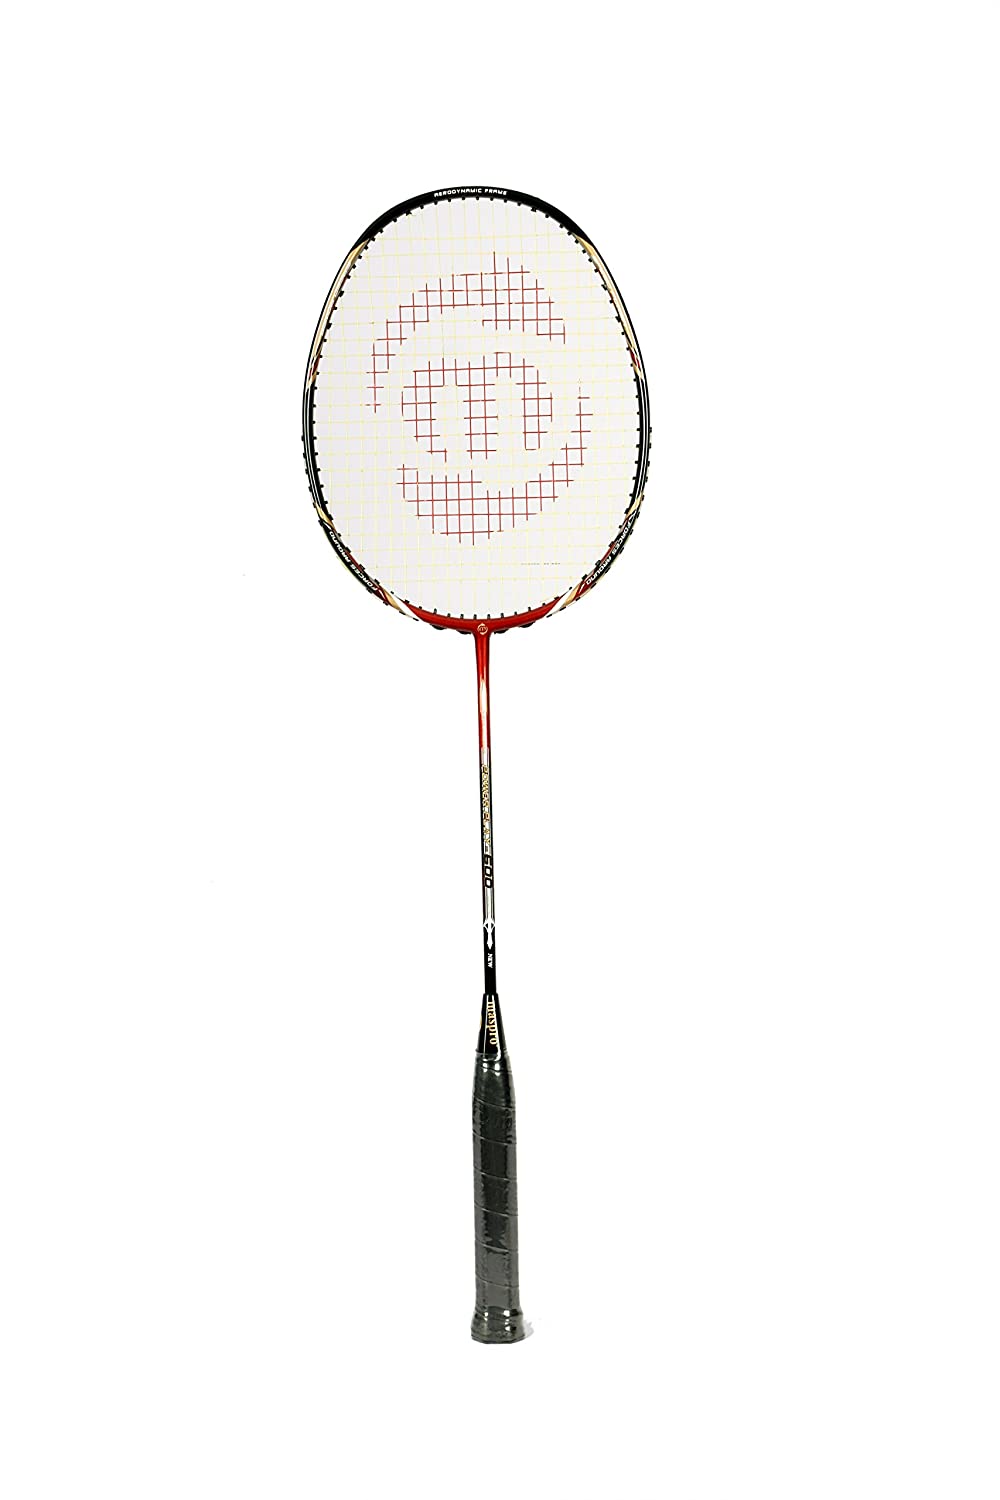 Maspro Power Play 600 Badminton Racket Galaxy